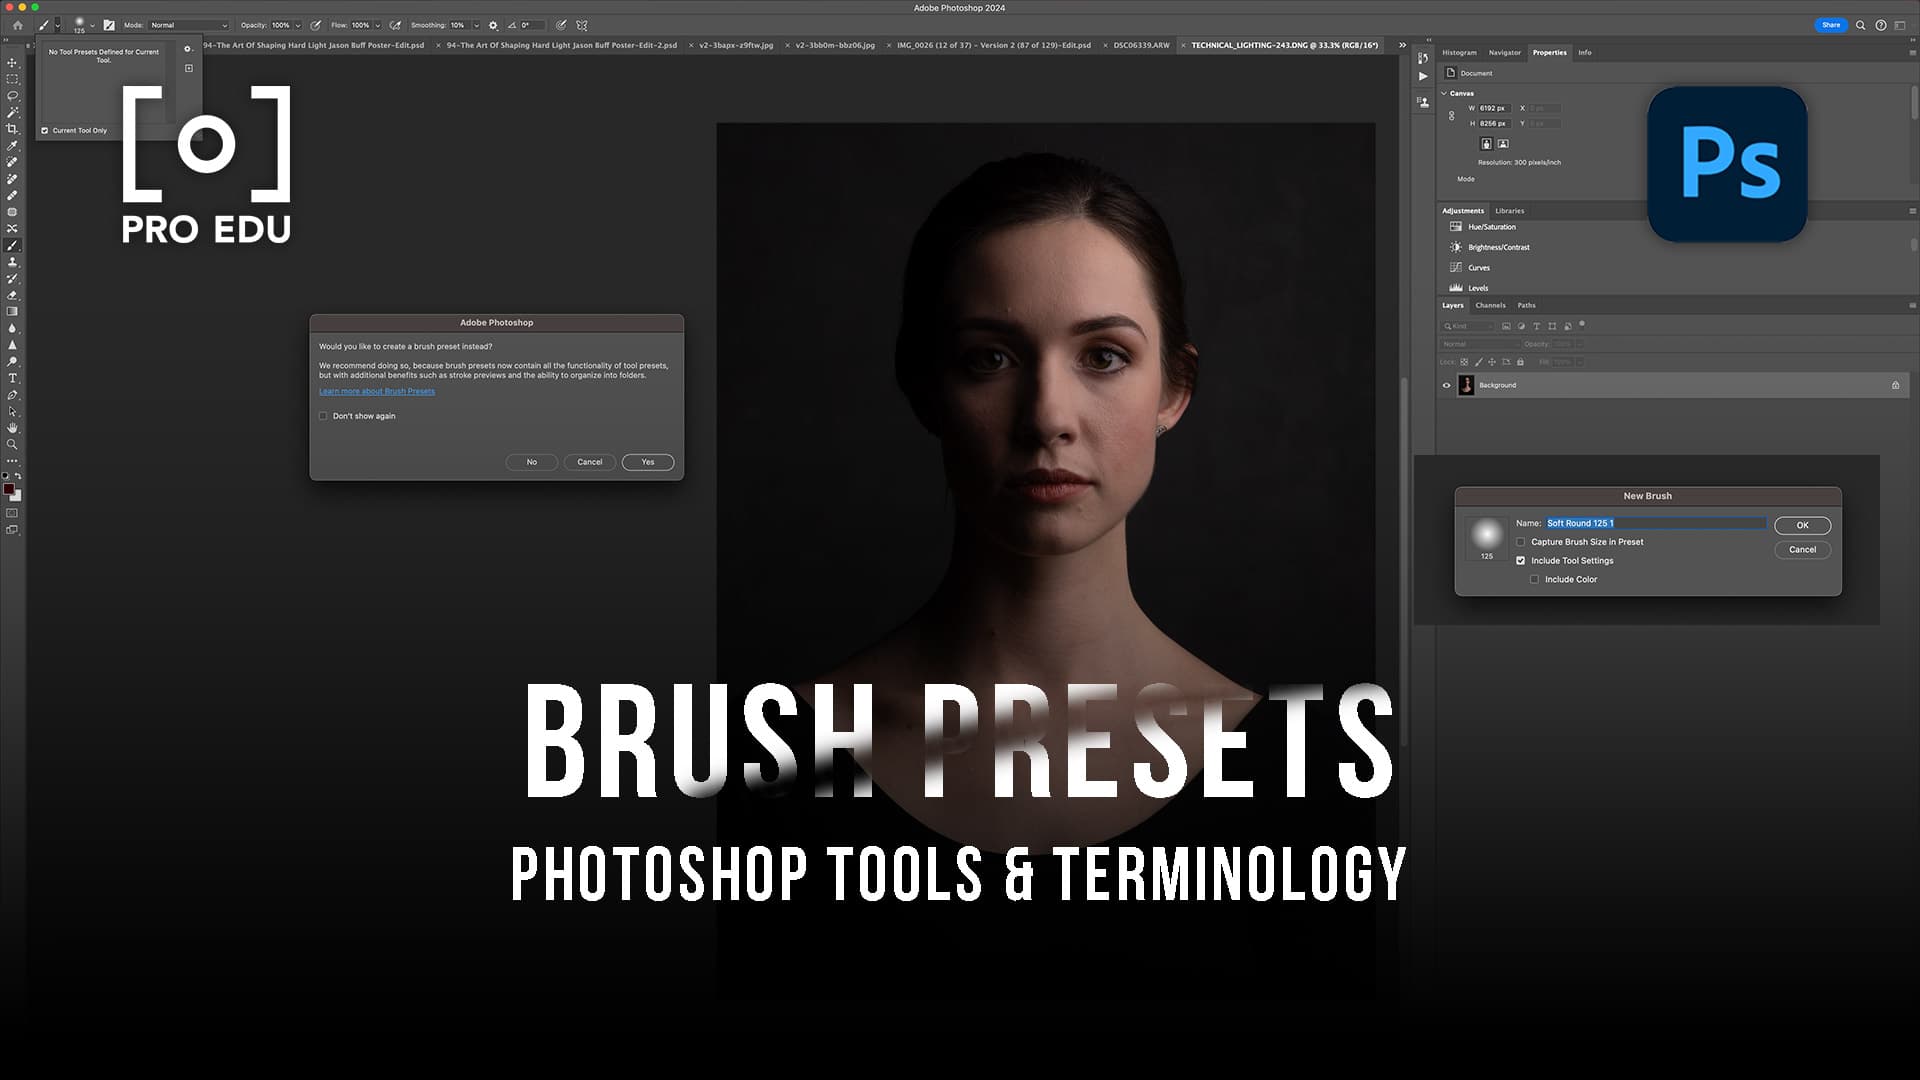 Brush Presets in Photoshop - PRO EDU Guide